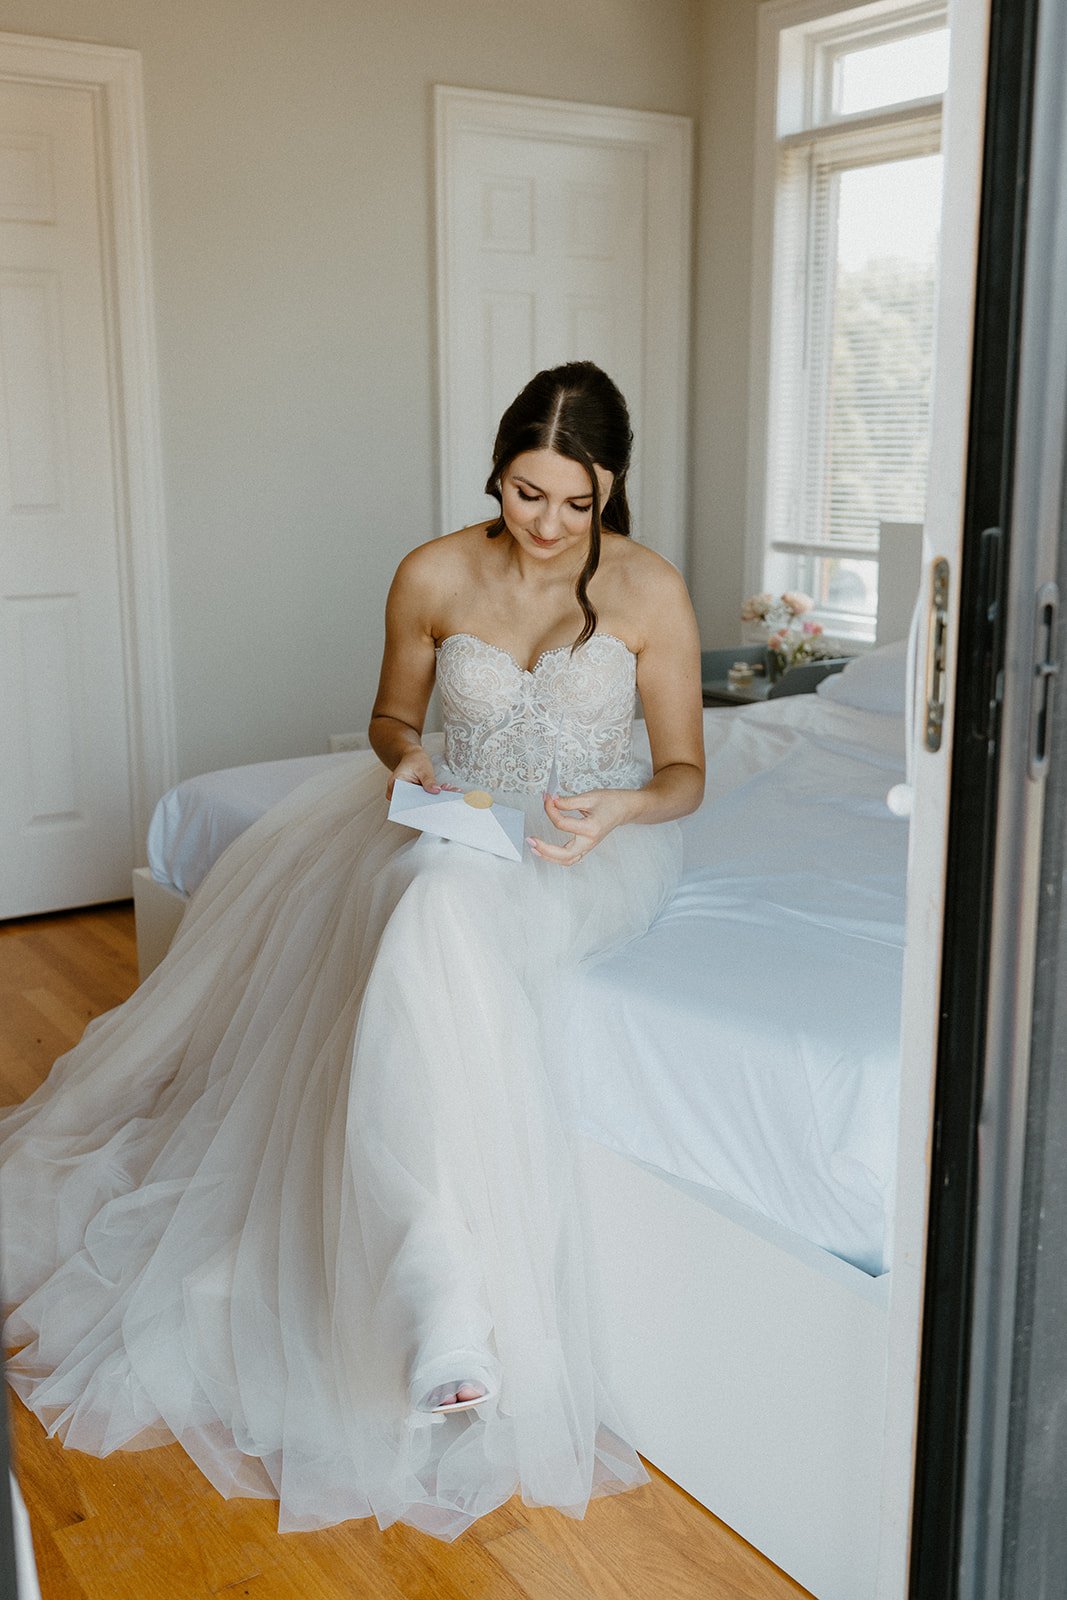 Luci in her wedding dress